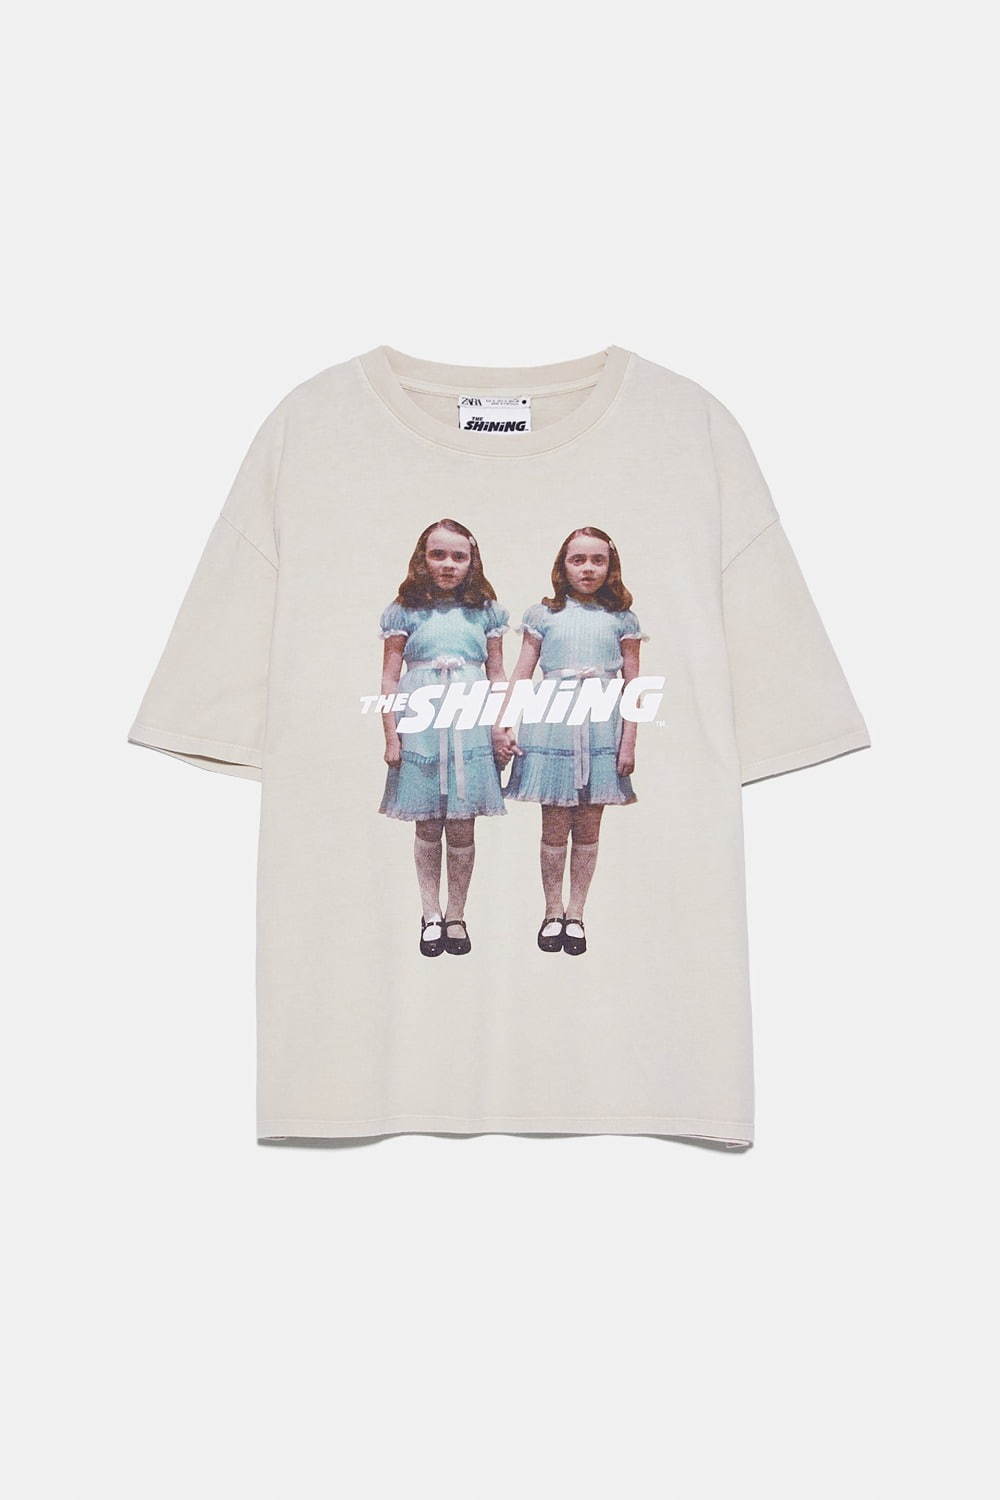 Zara 映画 シャイニング 双子 のtシャツ 劇中の場面をプリントしたスウェット フーディーも ファッションプレス